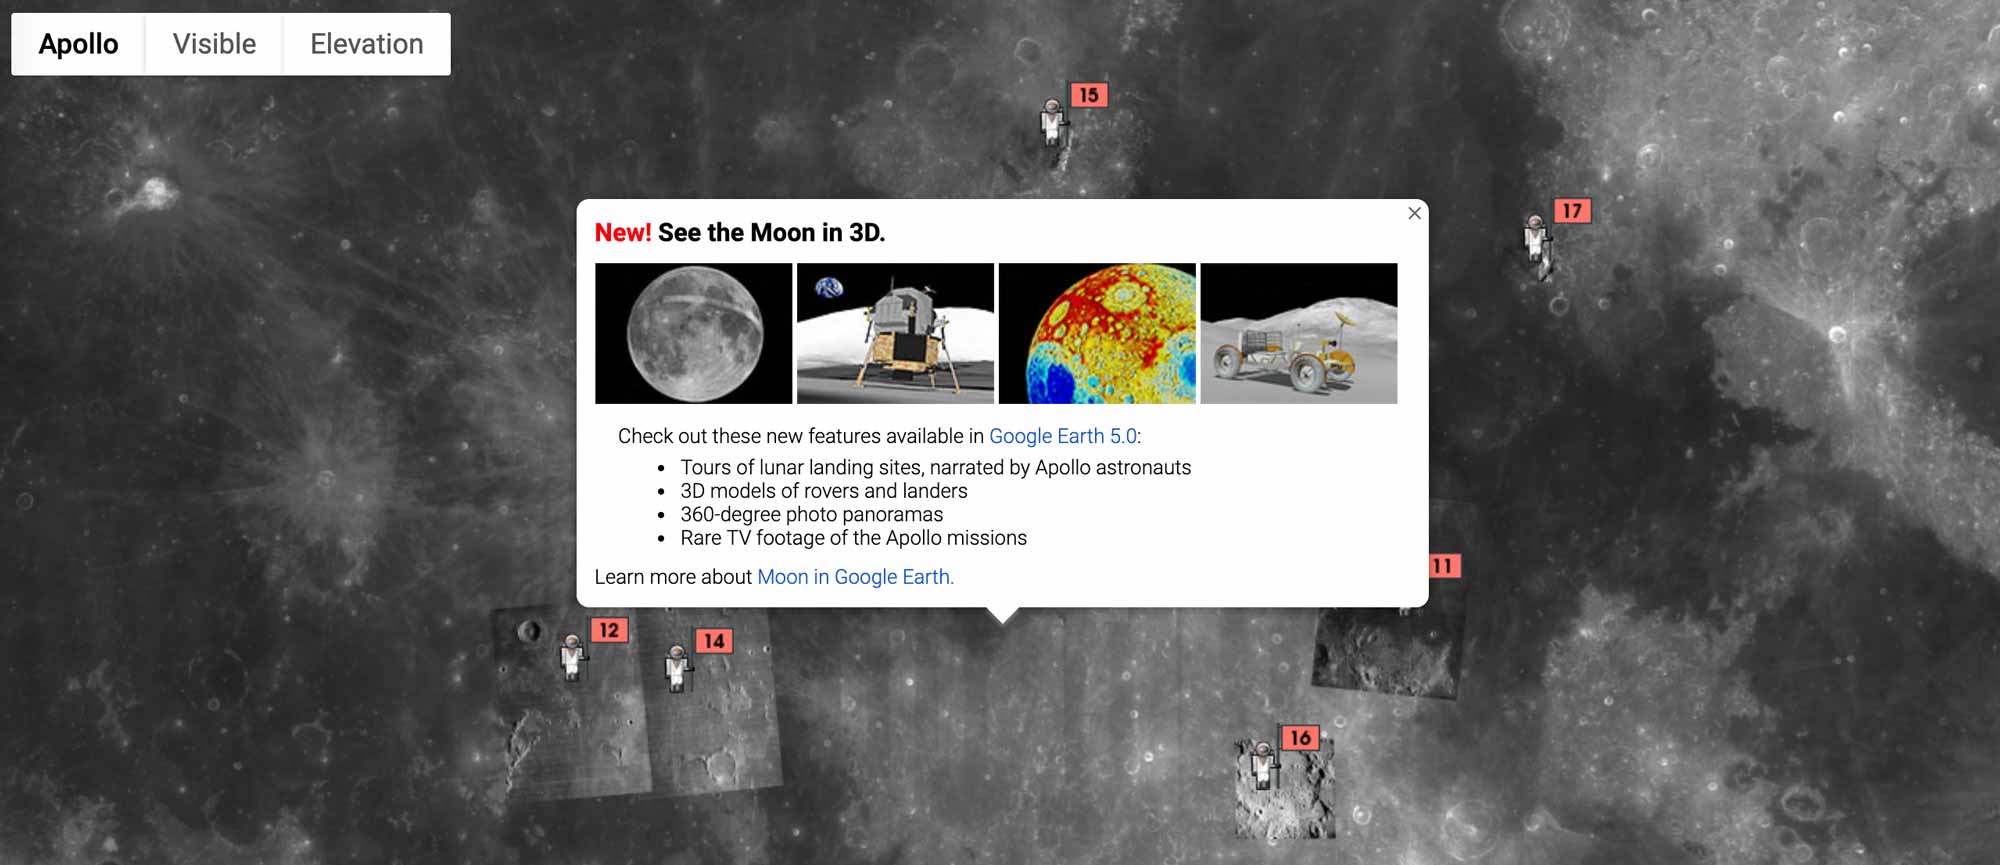 Google Celebrates Lunar Landings with New Google Moon App